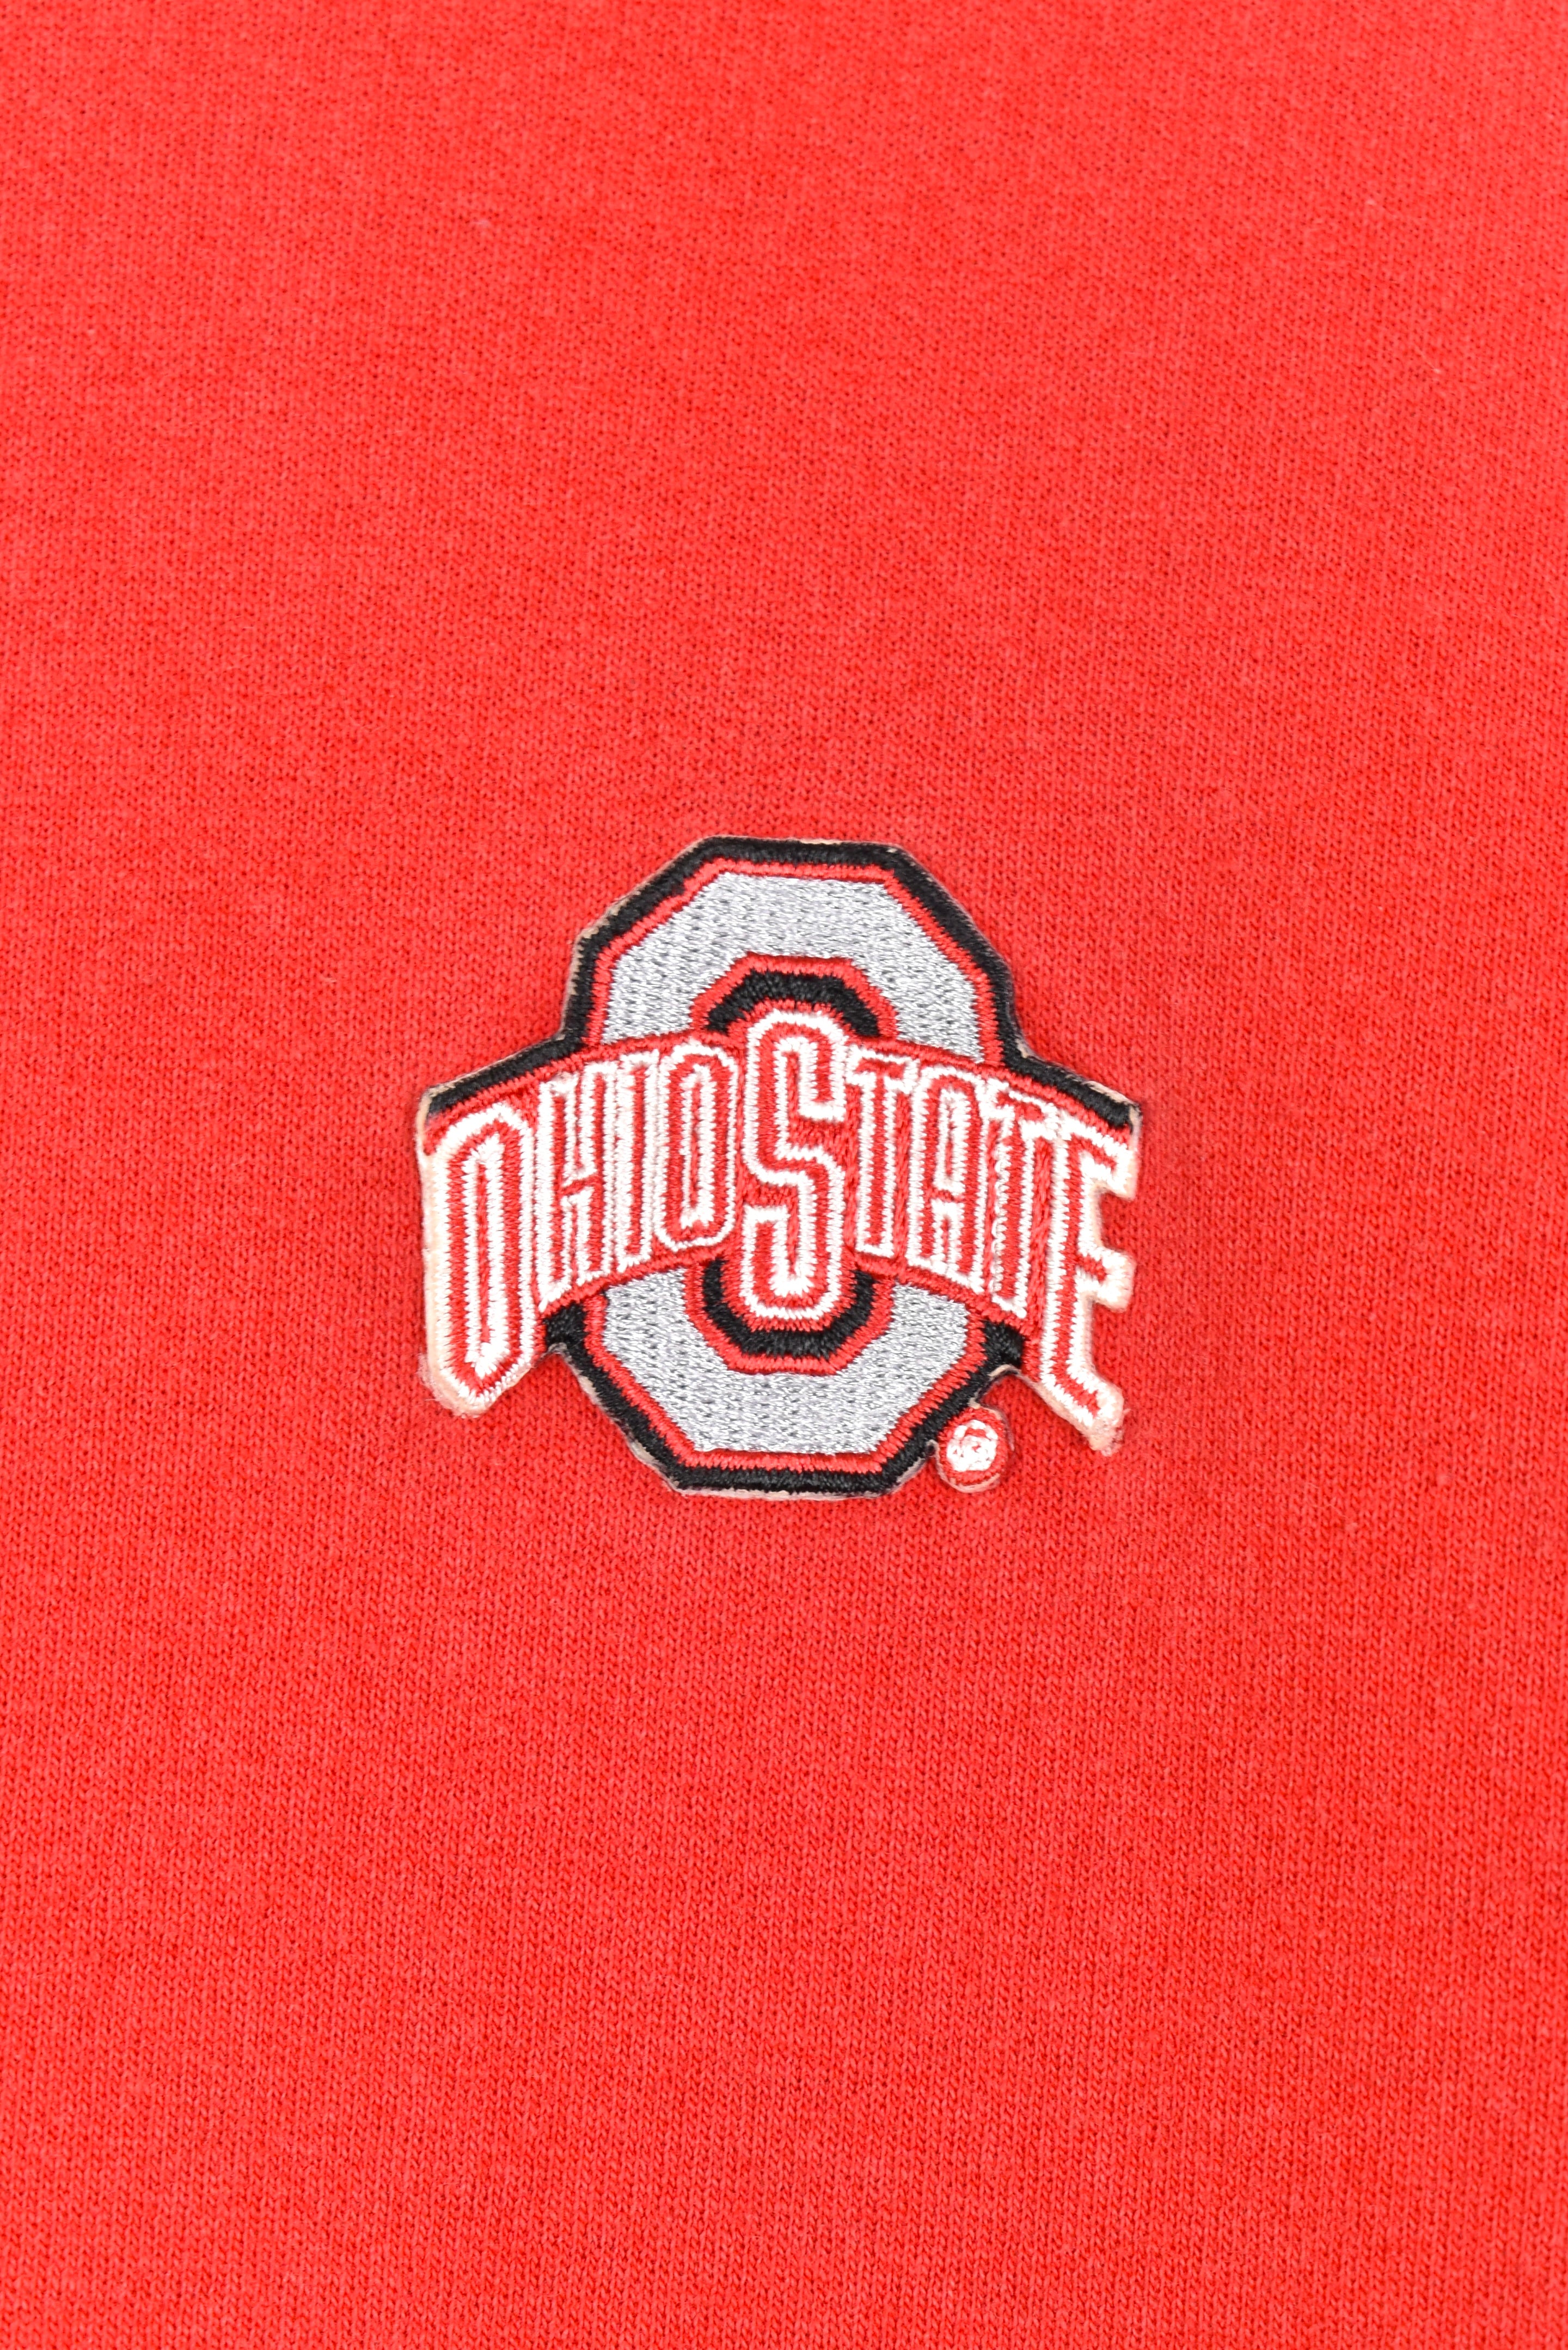 Vintage Ohio State University red hoodie | XXL COLLEGE